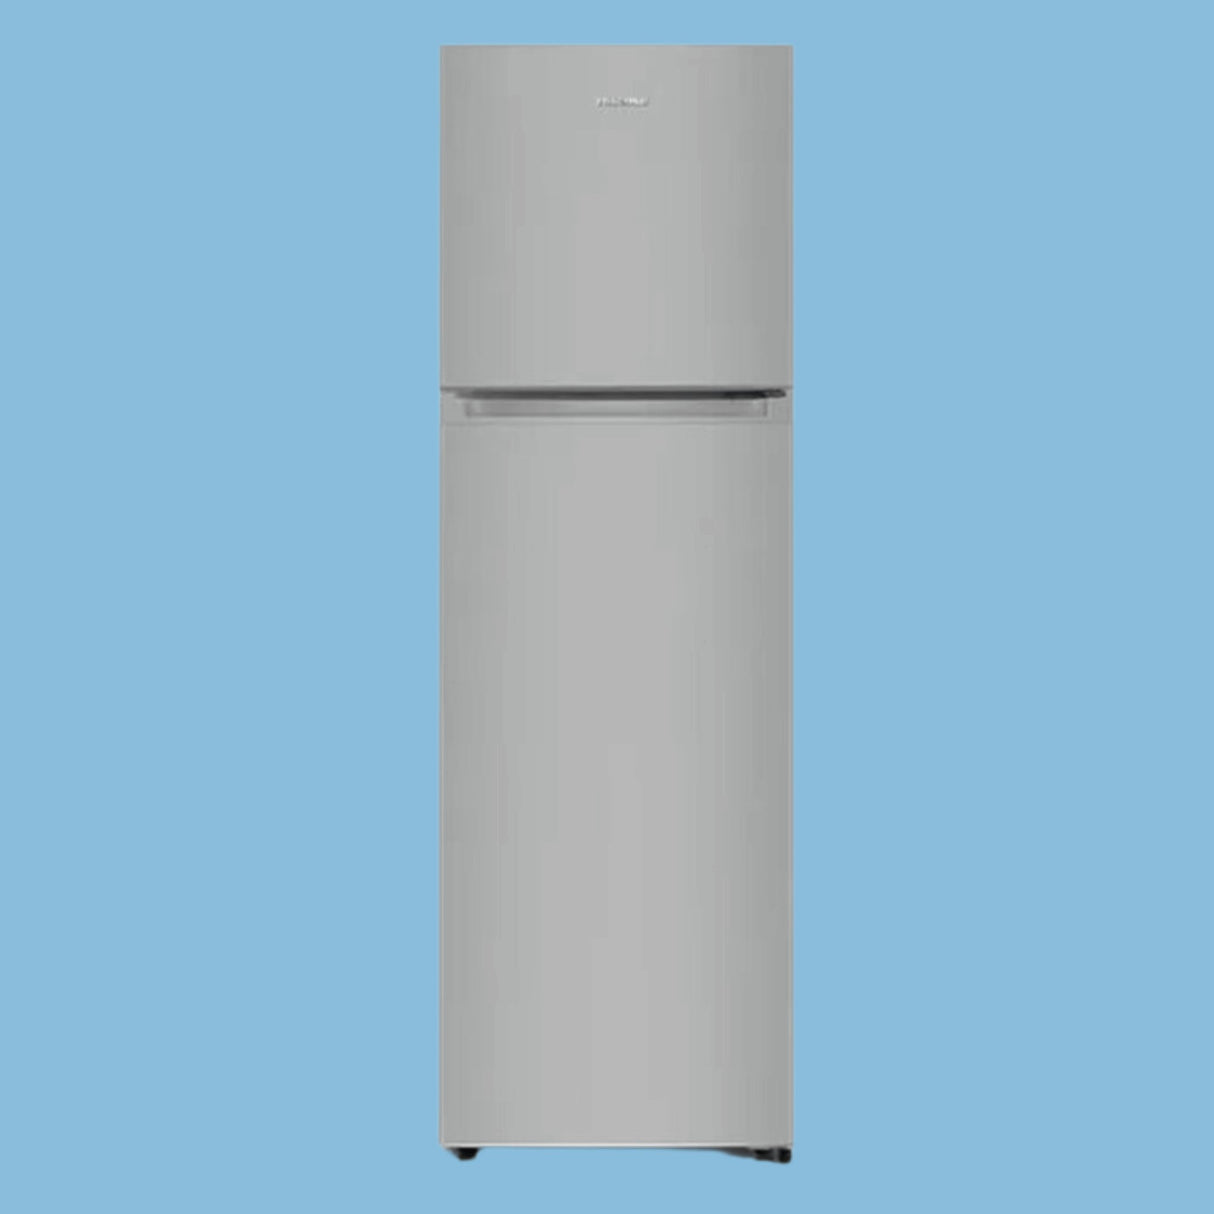 Hisense 220L Double Door Refrigerator RD22DR4SAS1 – Silver - KWT Tech Mart